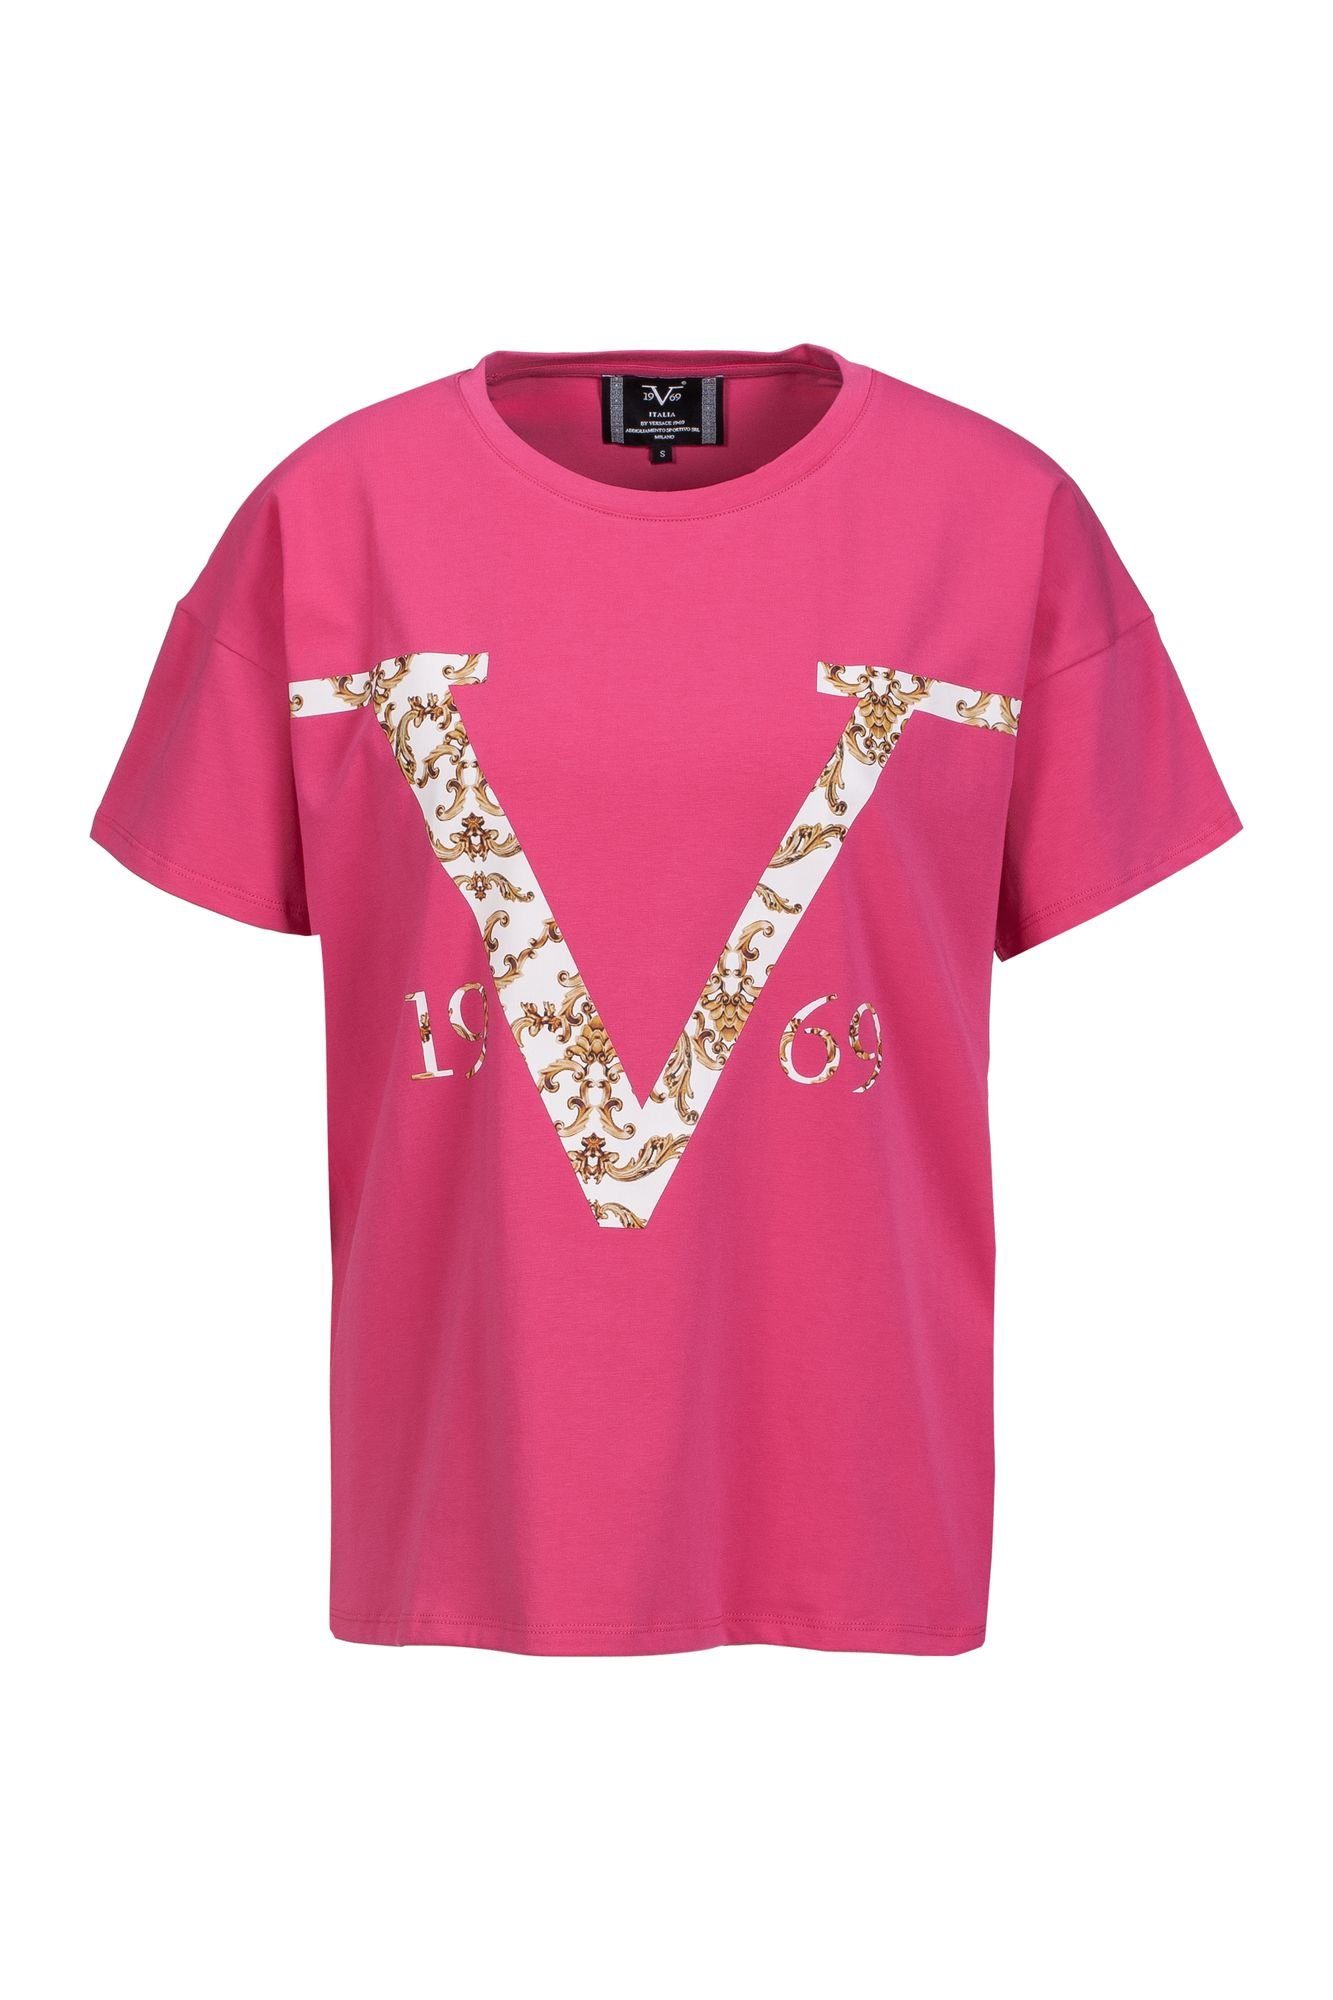 19V69 Italia by Versace T-Shirt by Versace Sportivo SRL - Josephine PINK